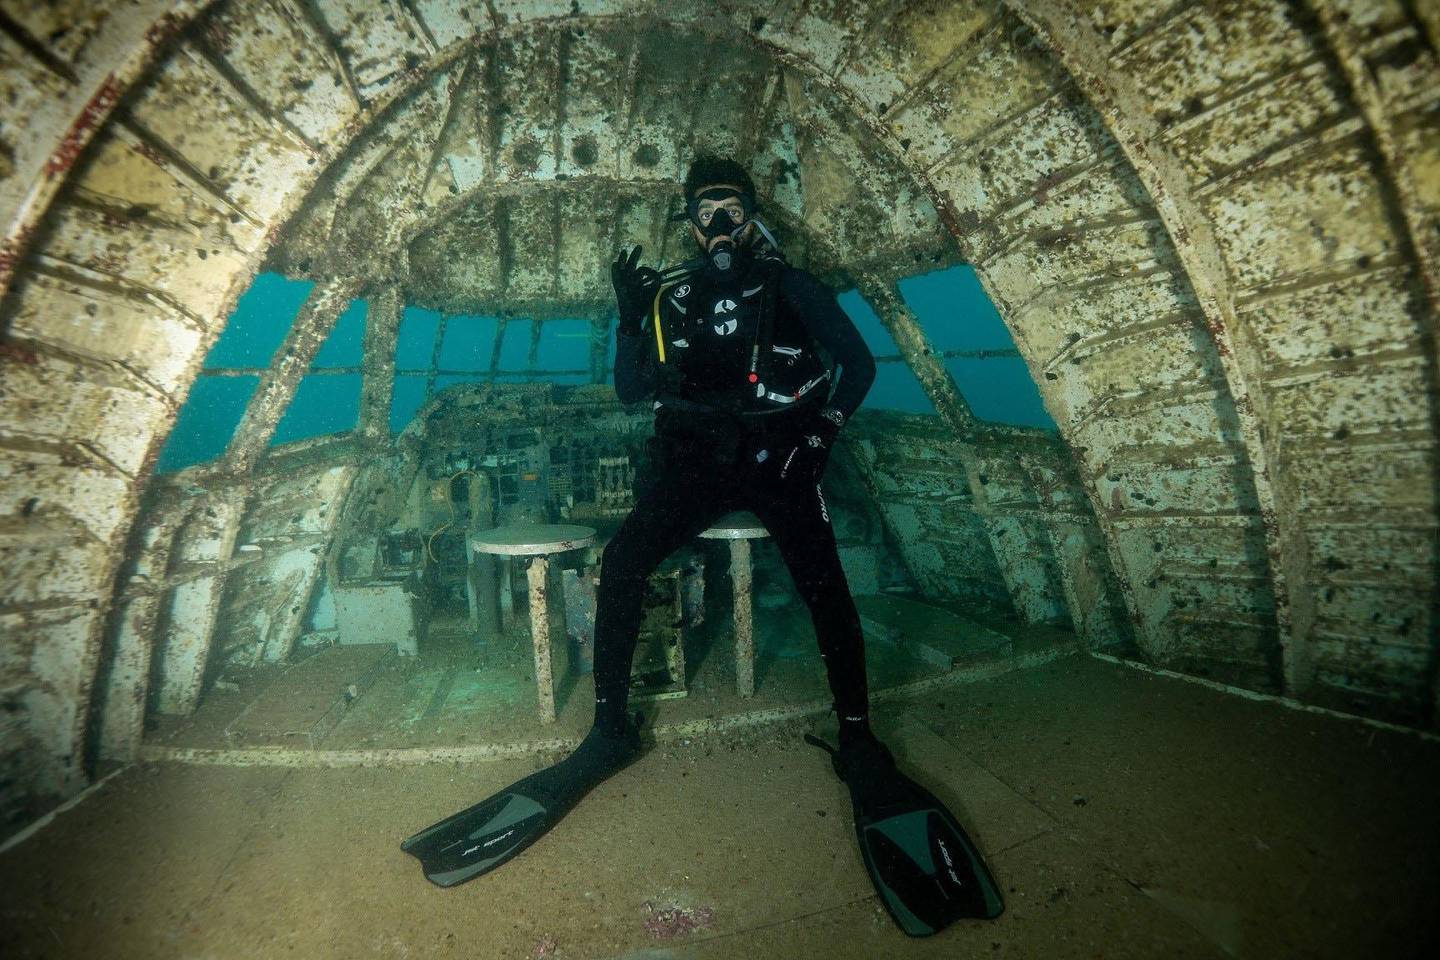 Diving Enthusiast visiting the site of Dive Bahrain. Courtesy Bahrain Tourism & Exhibitions Authority